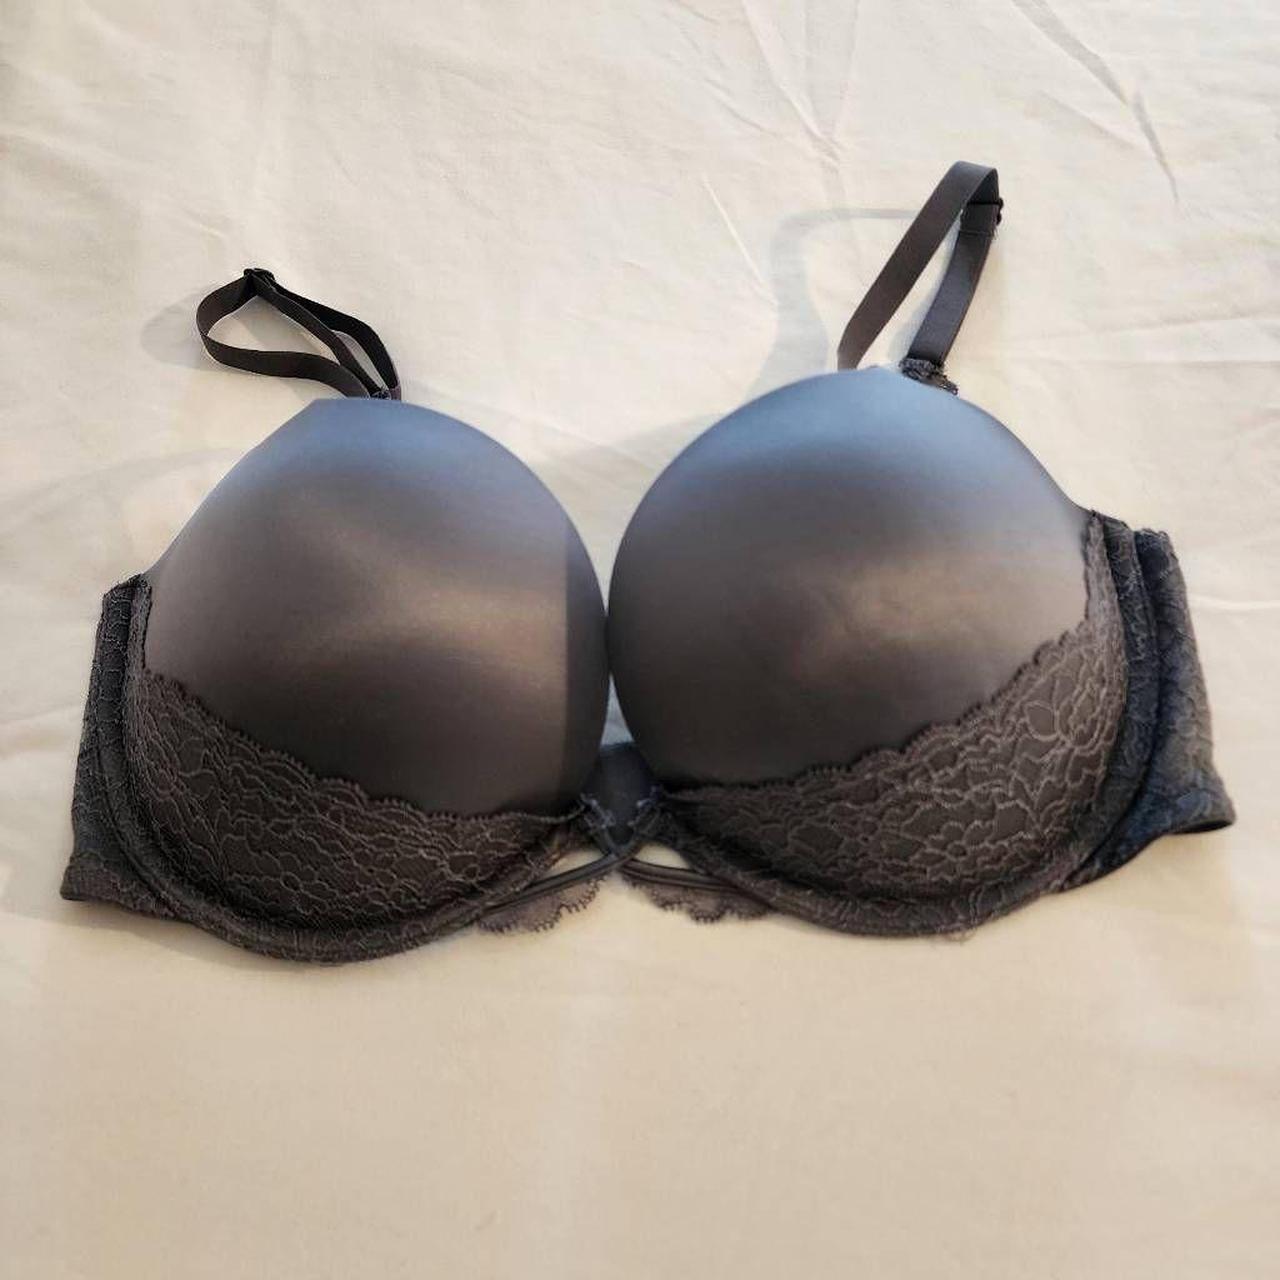 Victoria’s Secret super sexy black lace push-up bra with padding.